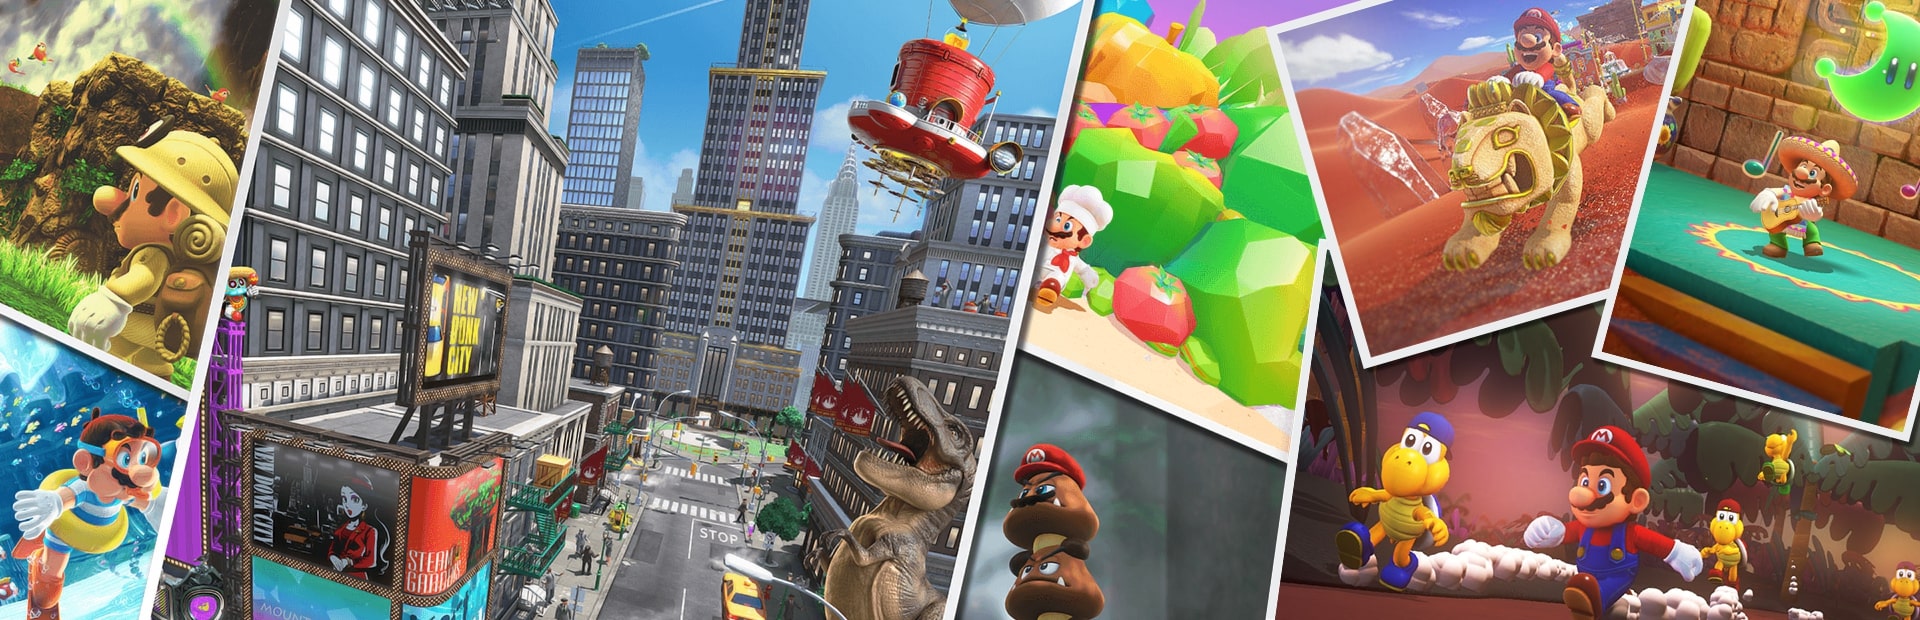 Super Mario Odyssey | Nintendo Switch Digital Download | Wallpaper